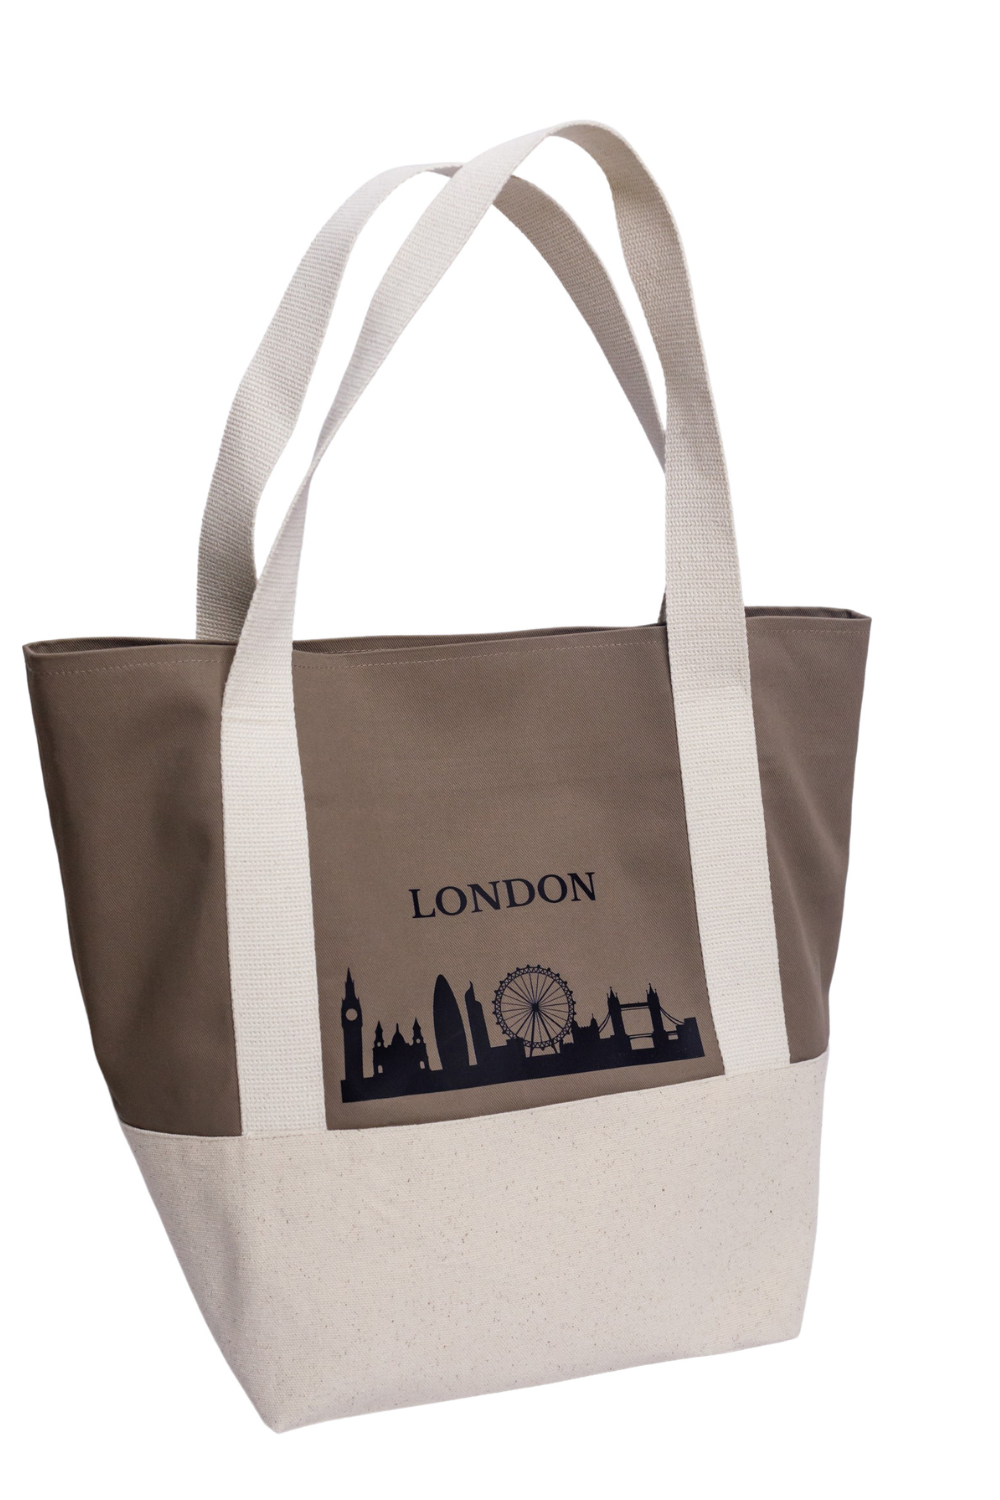 Cotton ecological shopping bag white London 05S04